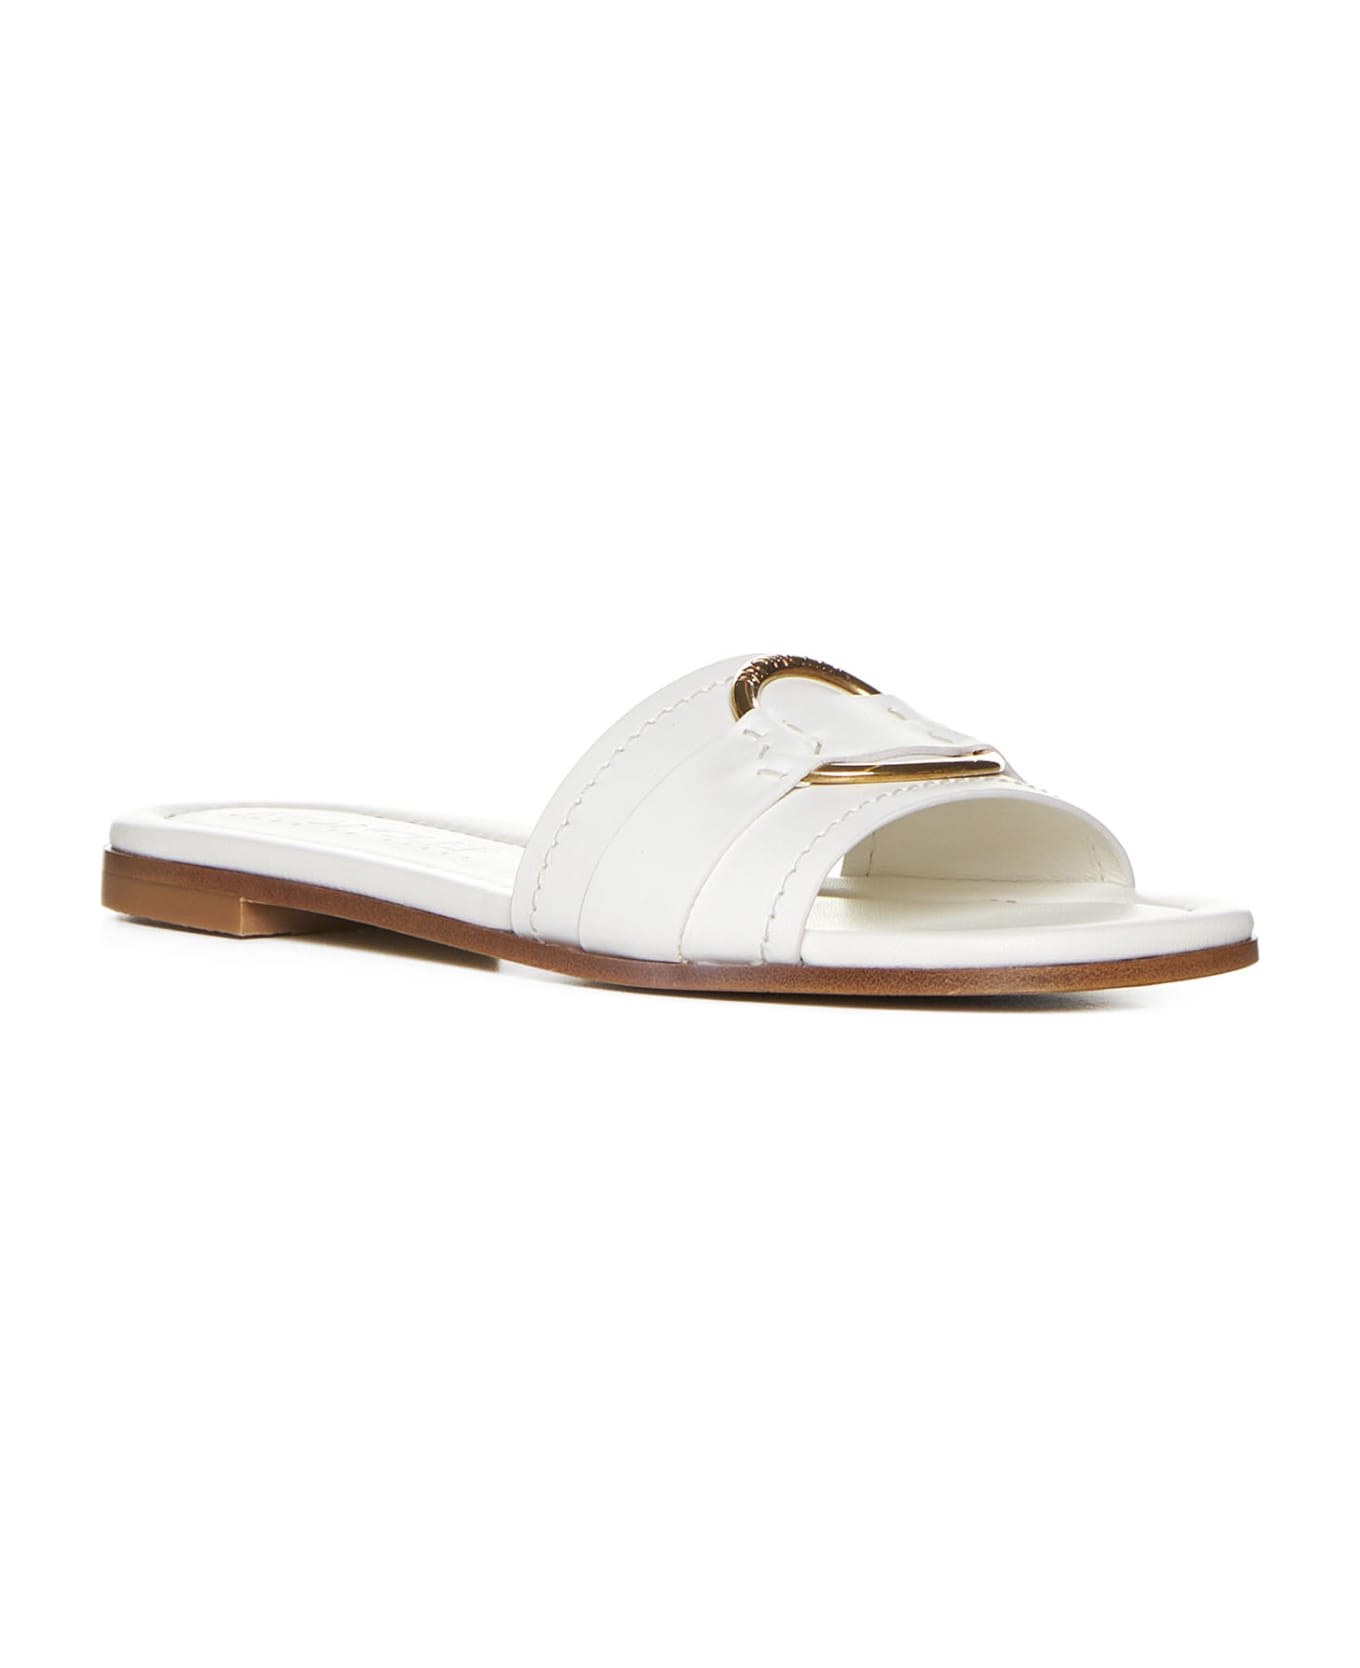 Moncler Sandals - Bianco